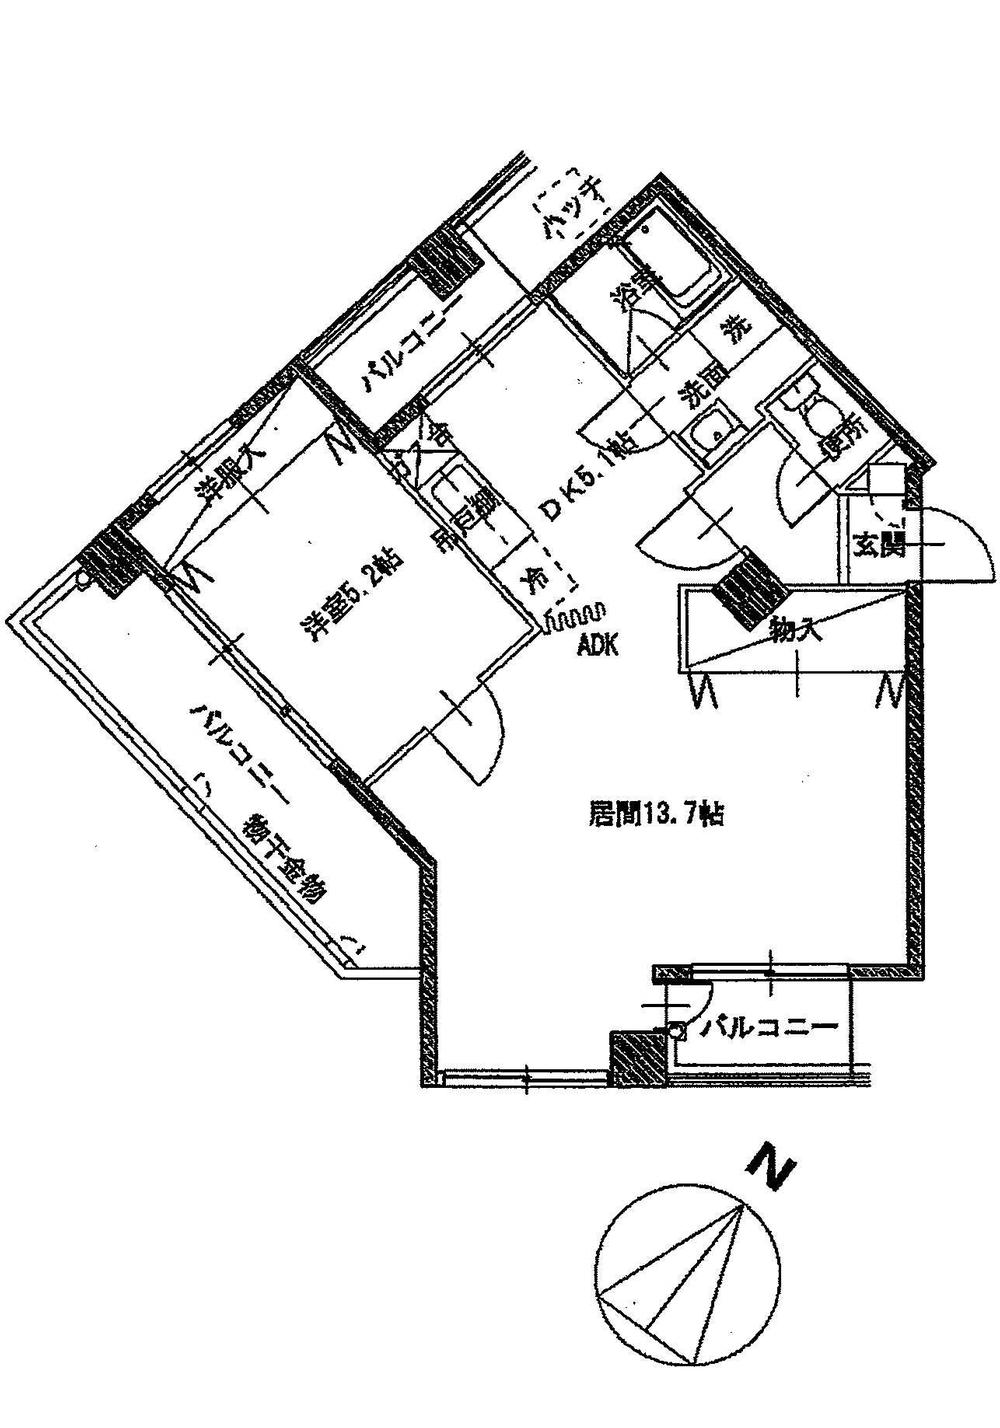 Floor plan. 1DK, Price 12.3 million yen, Occupied area 51.84 sq m , Balcony area 14.8 sq m 5.1DK 13.7L 5.2 Hiroshi